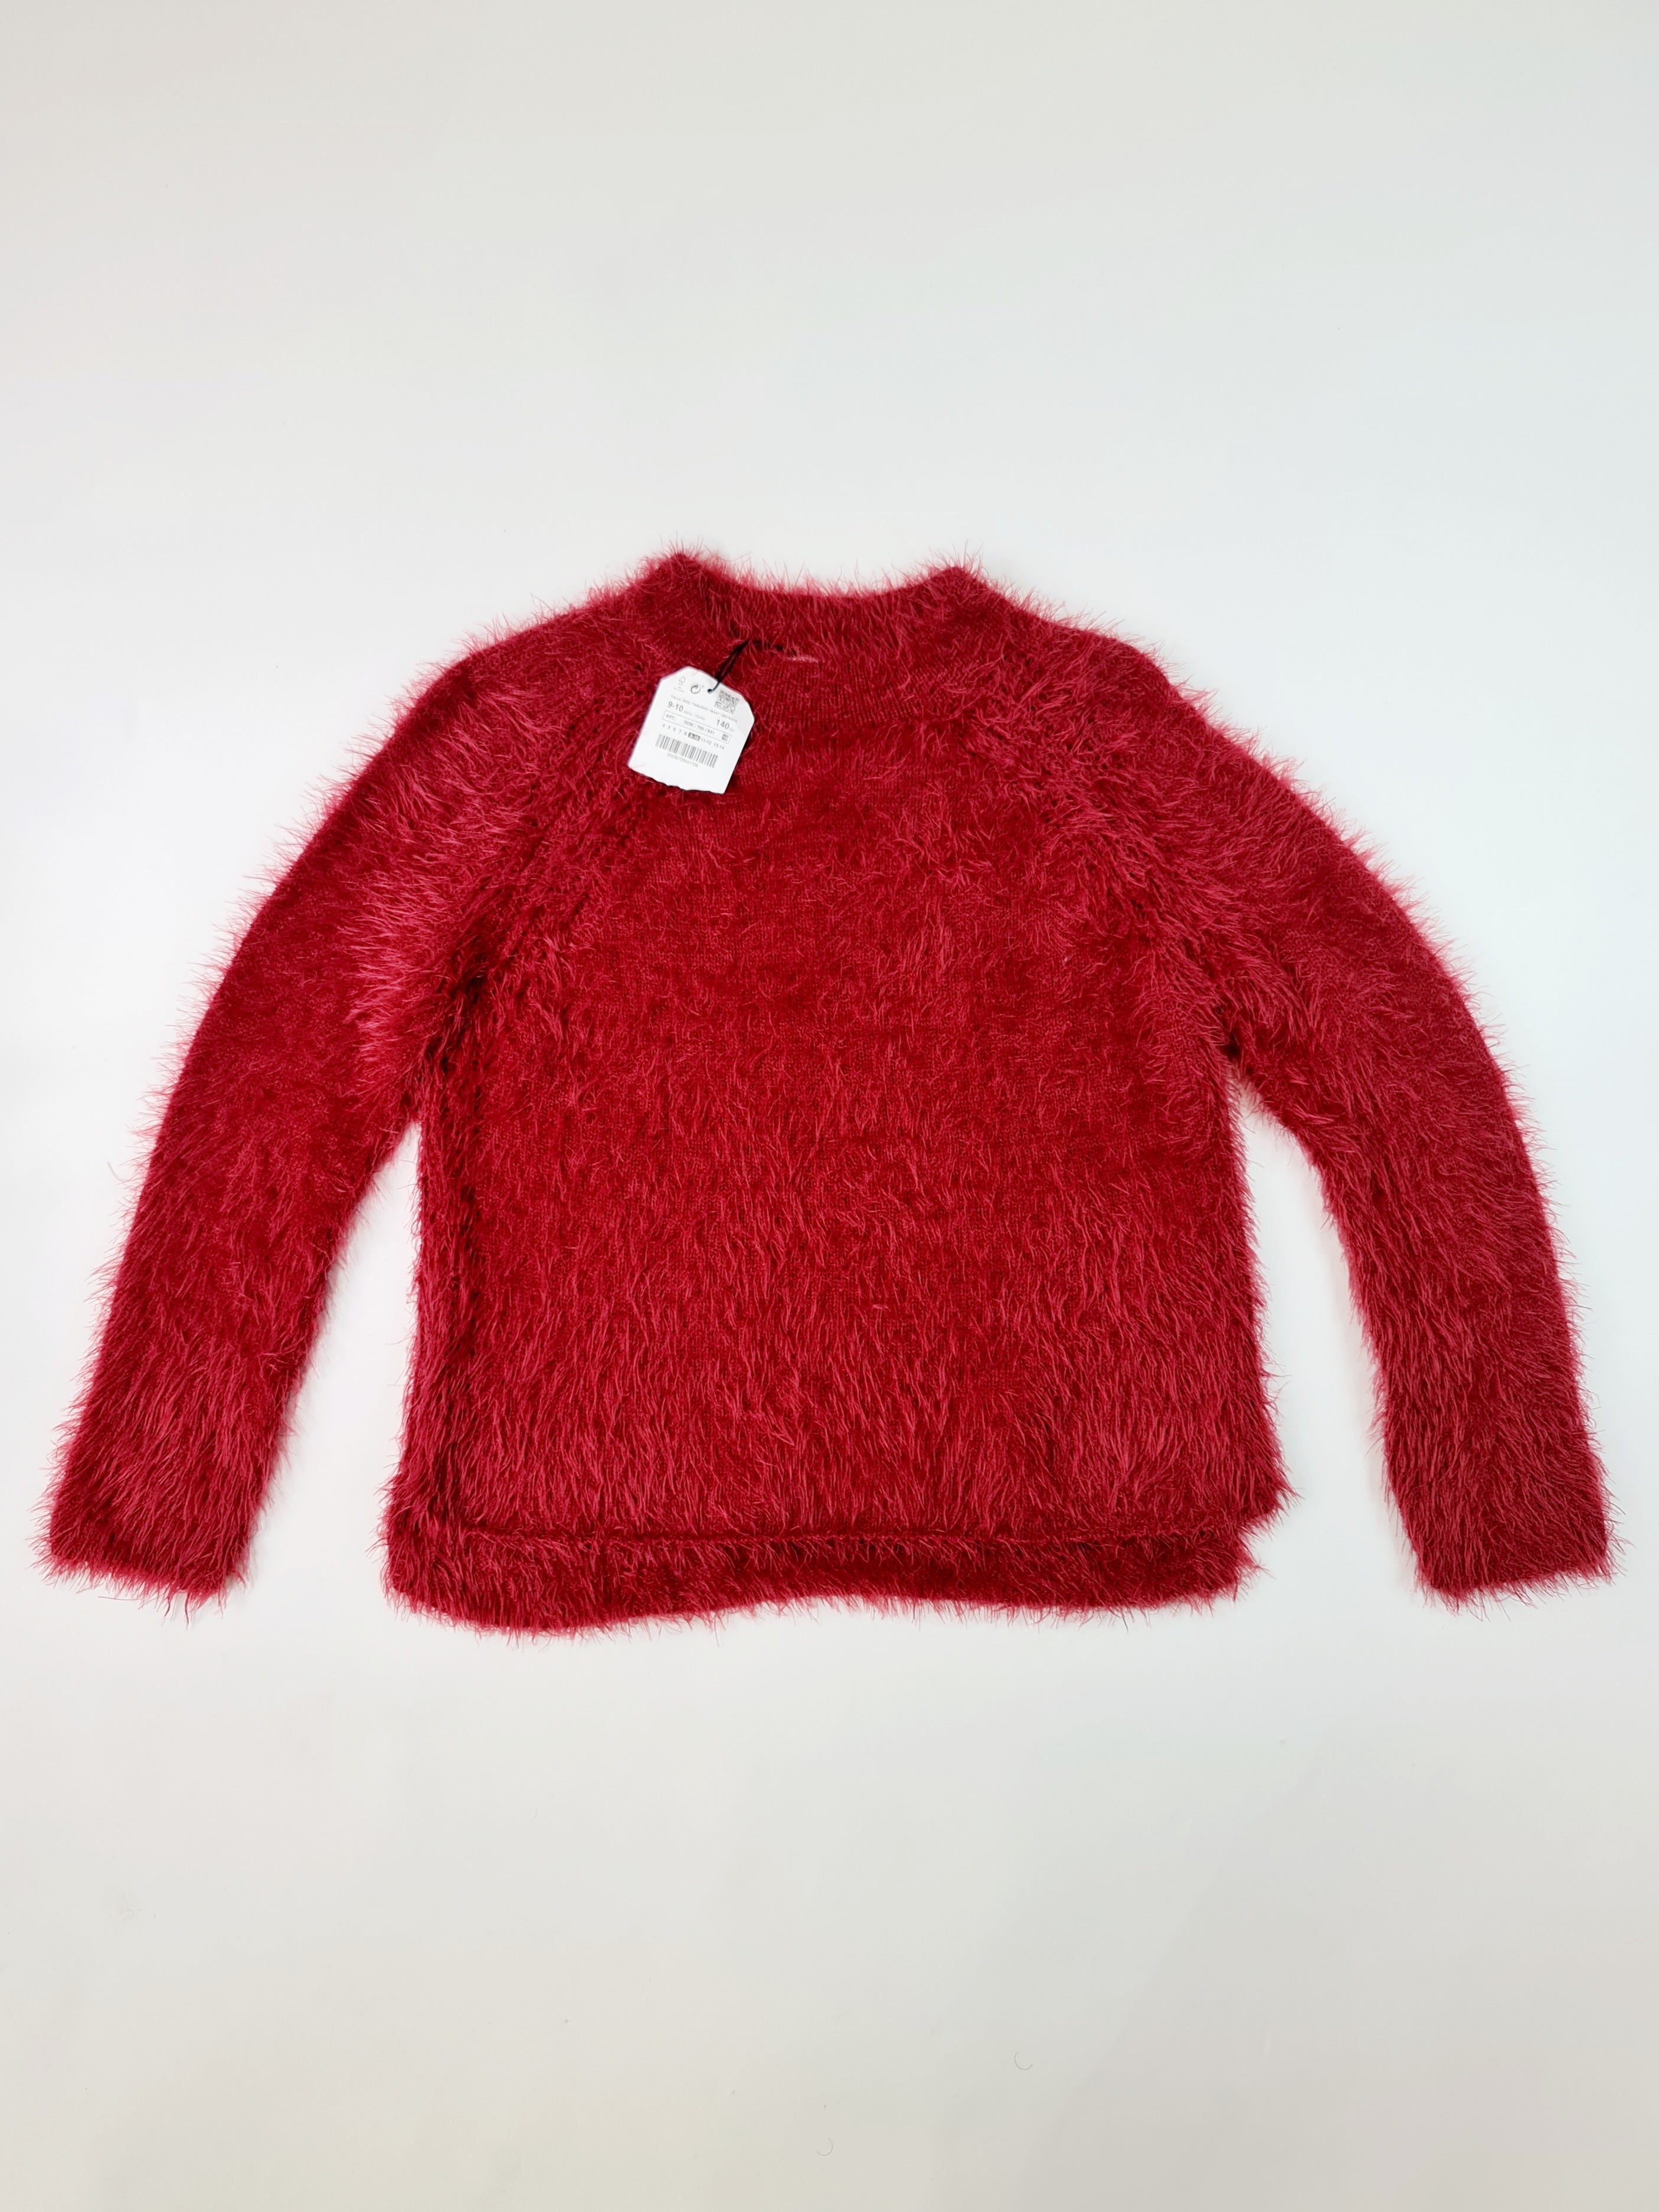 Sweater Zara - Rojo